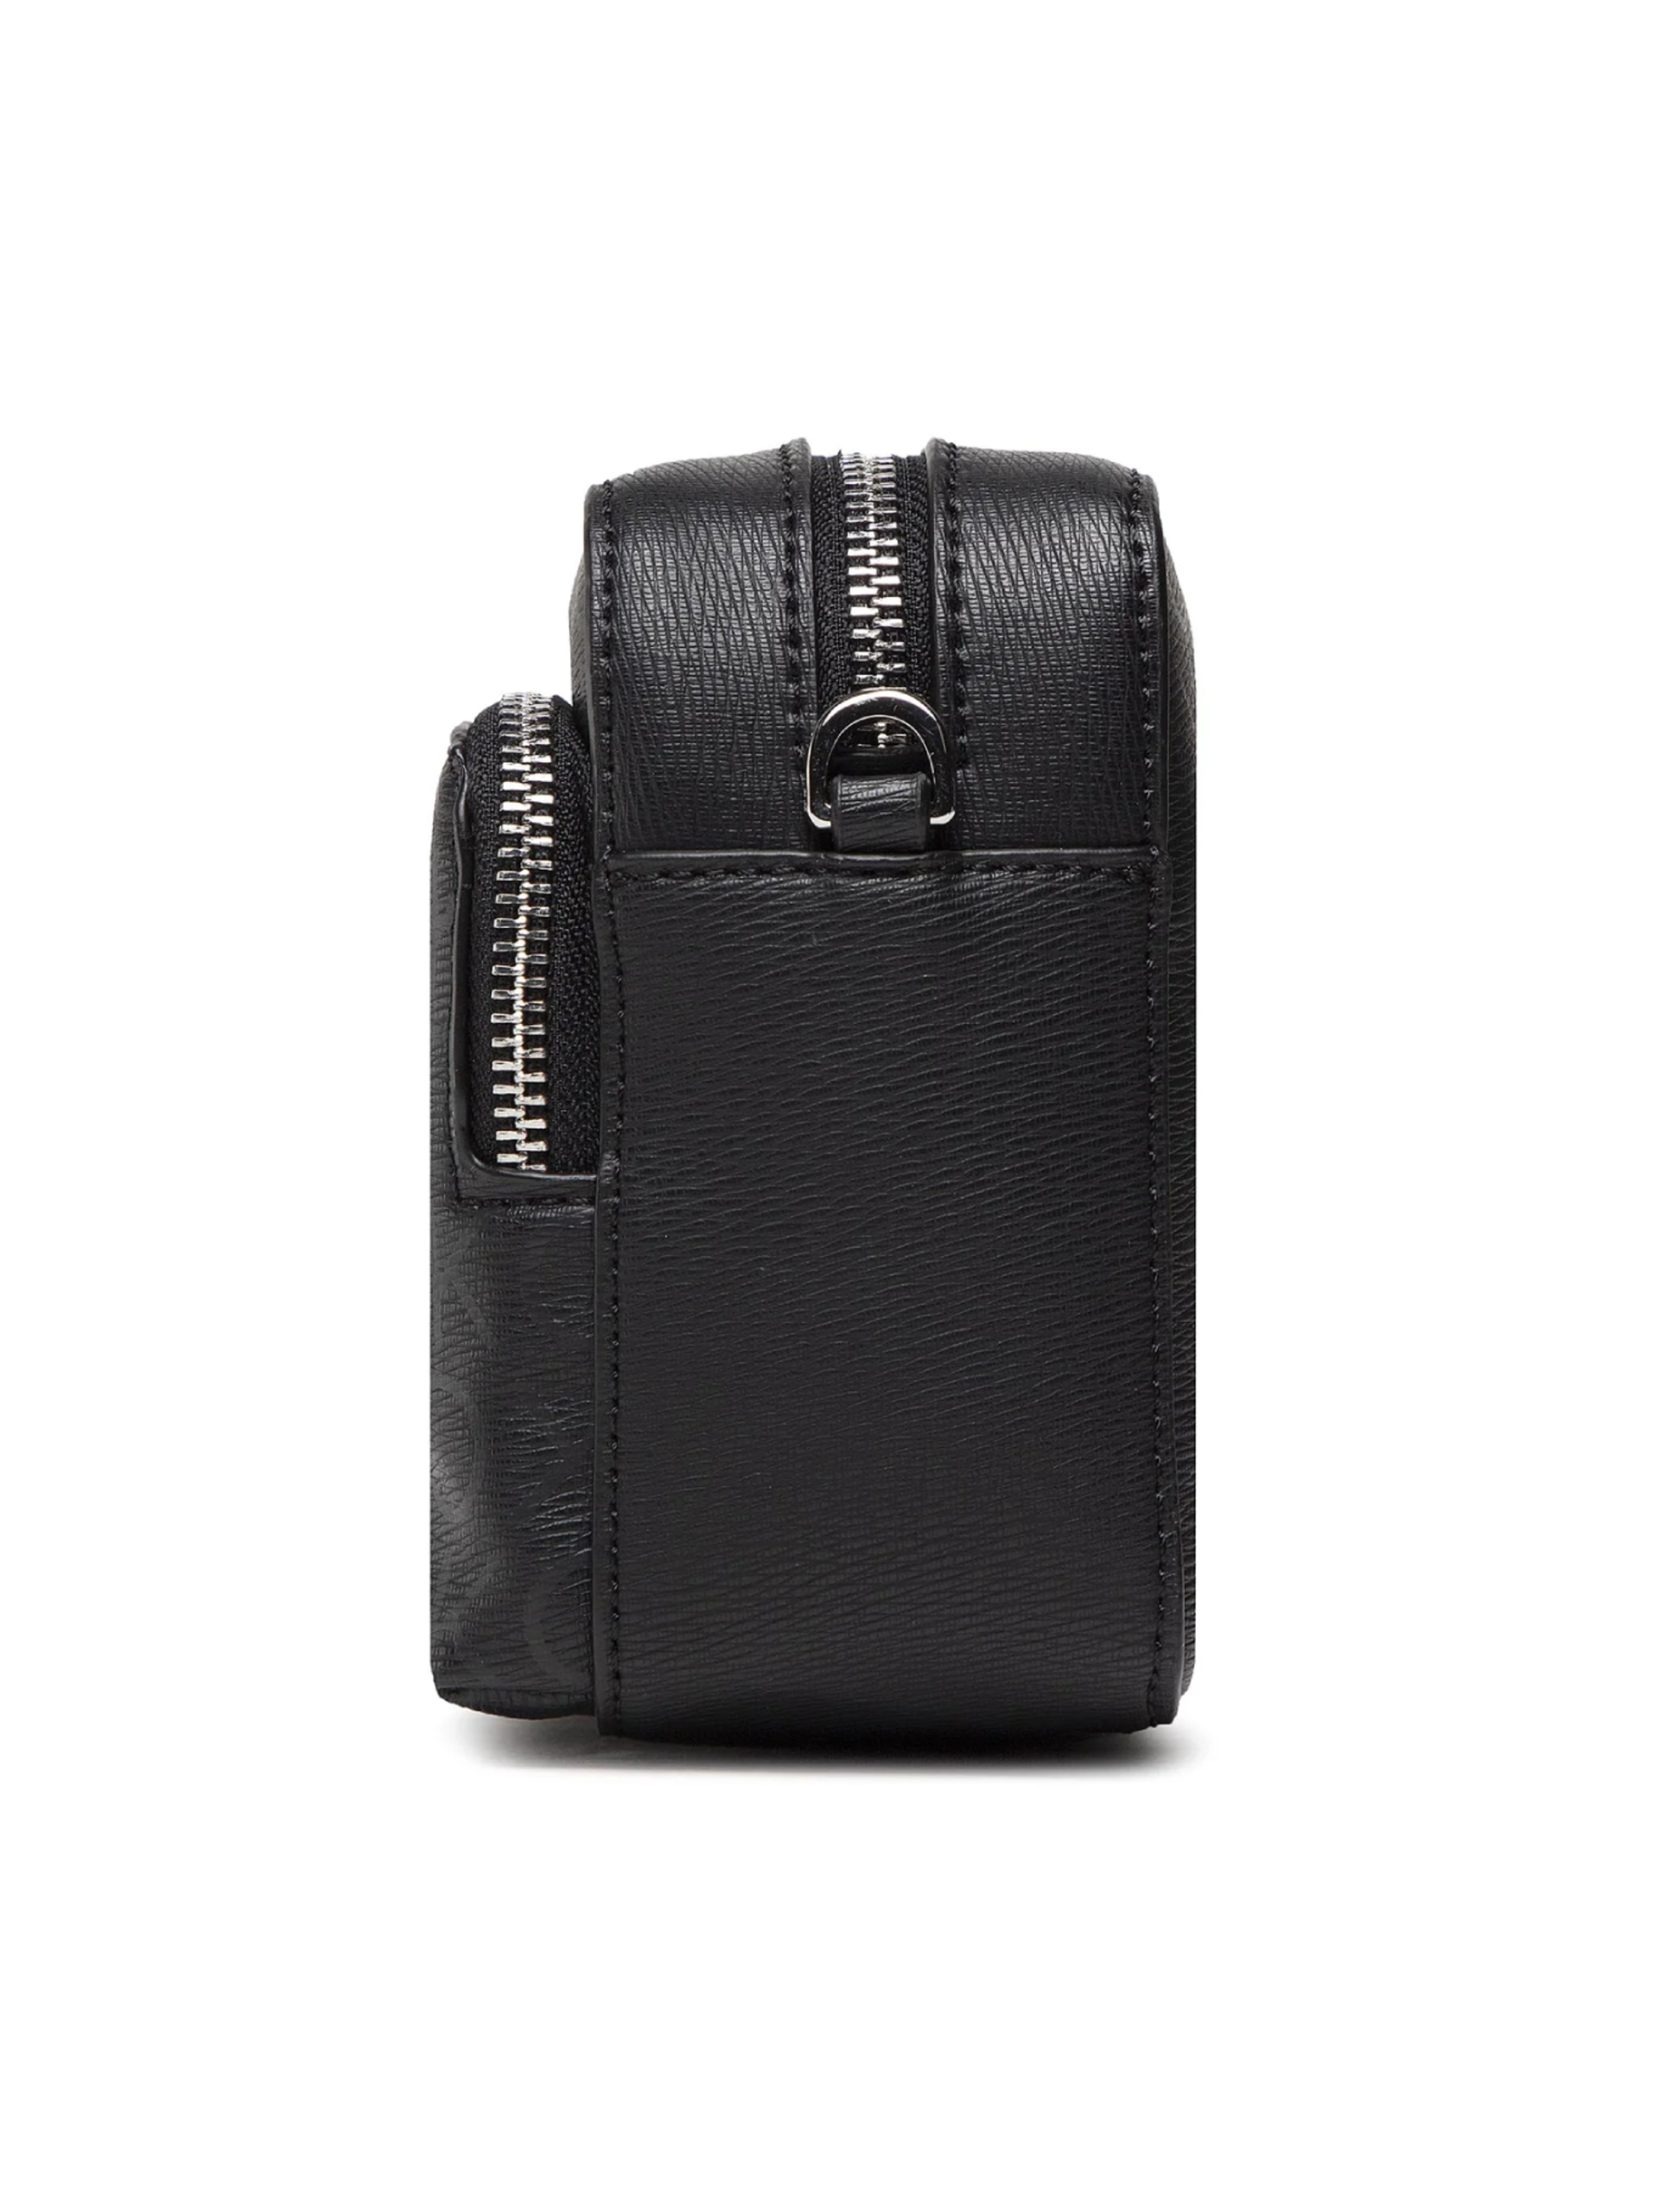 Calvin Klein dámská černá crossbody kabelka - OS (0GJ)